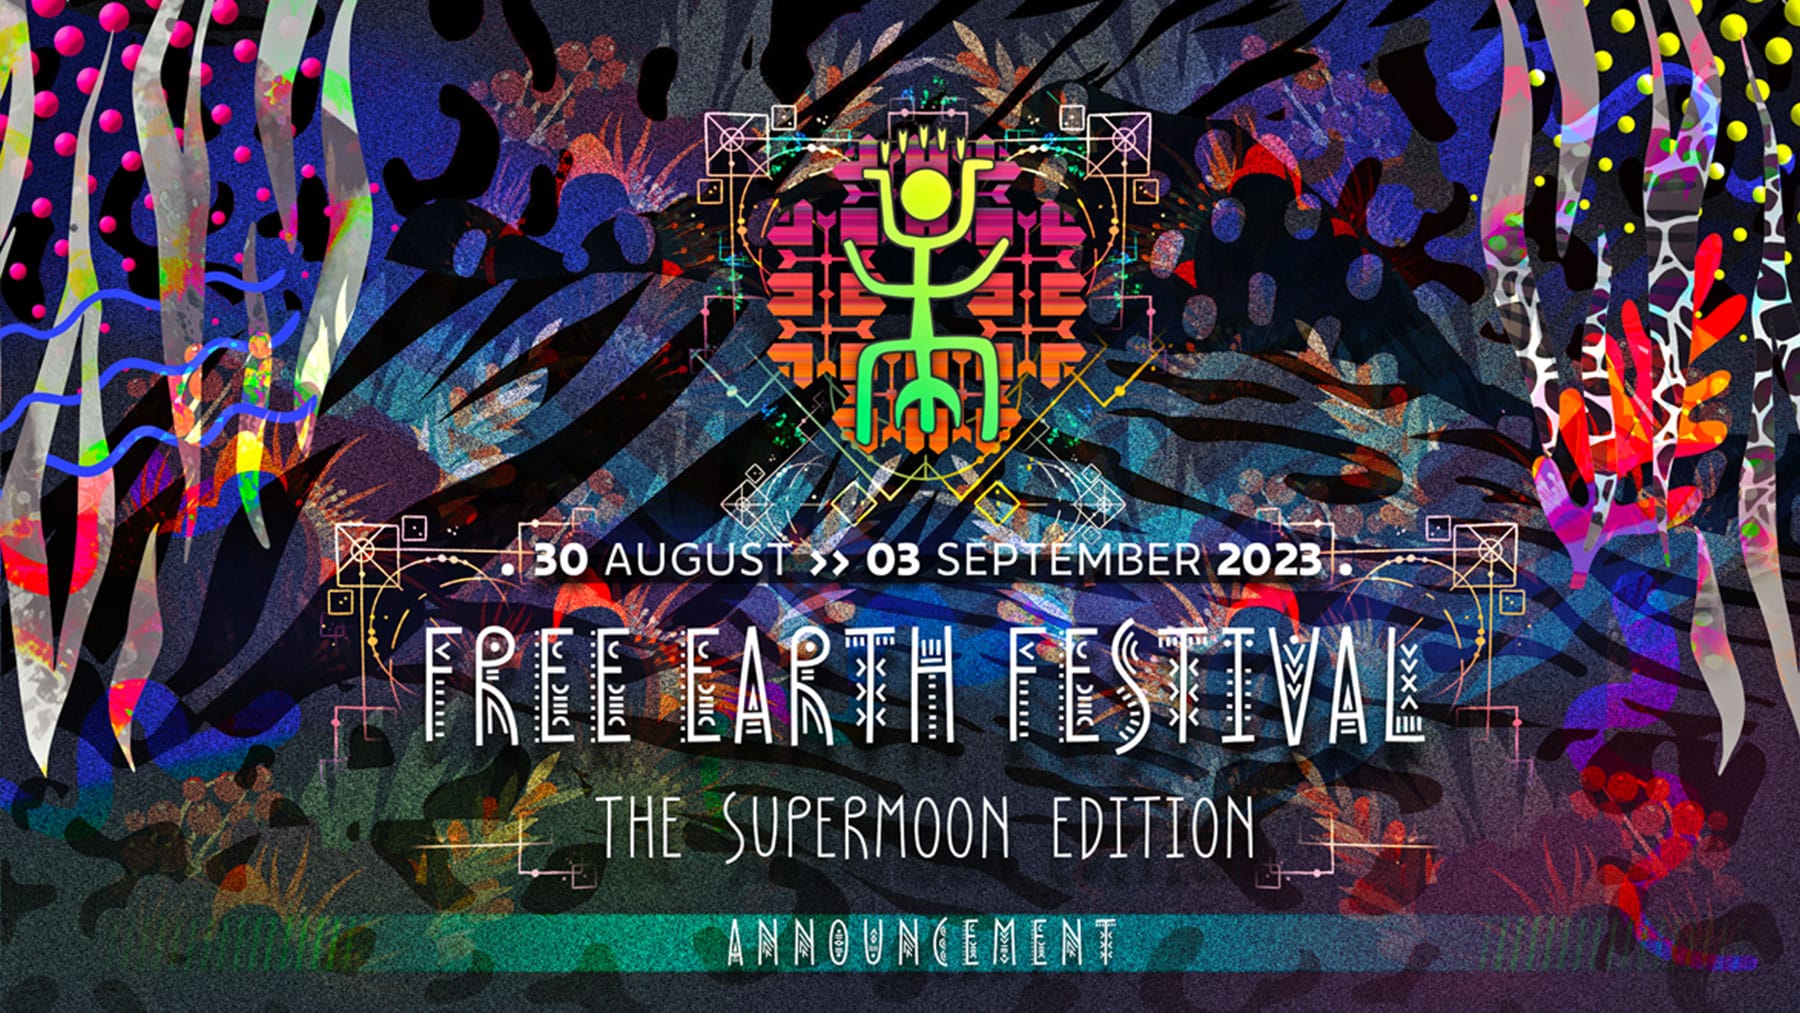 Free earth festival psytrance tickets